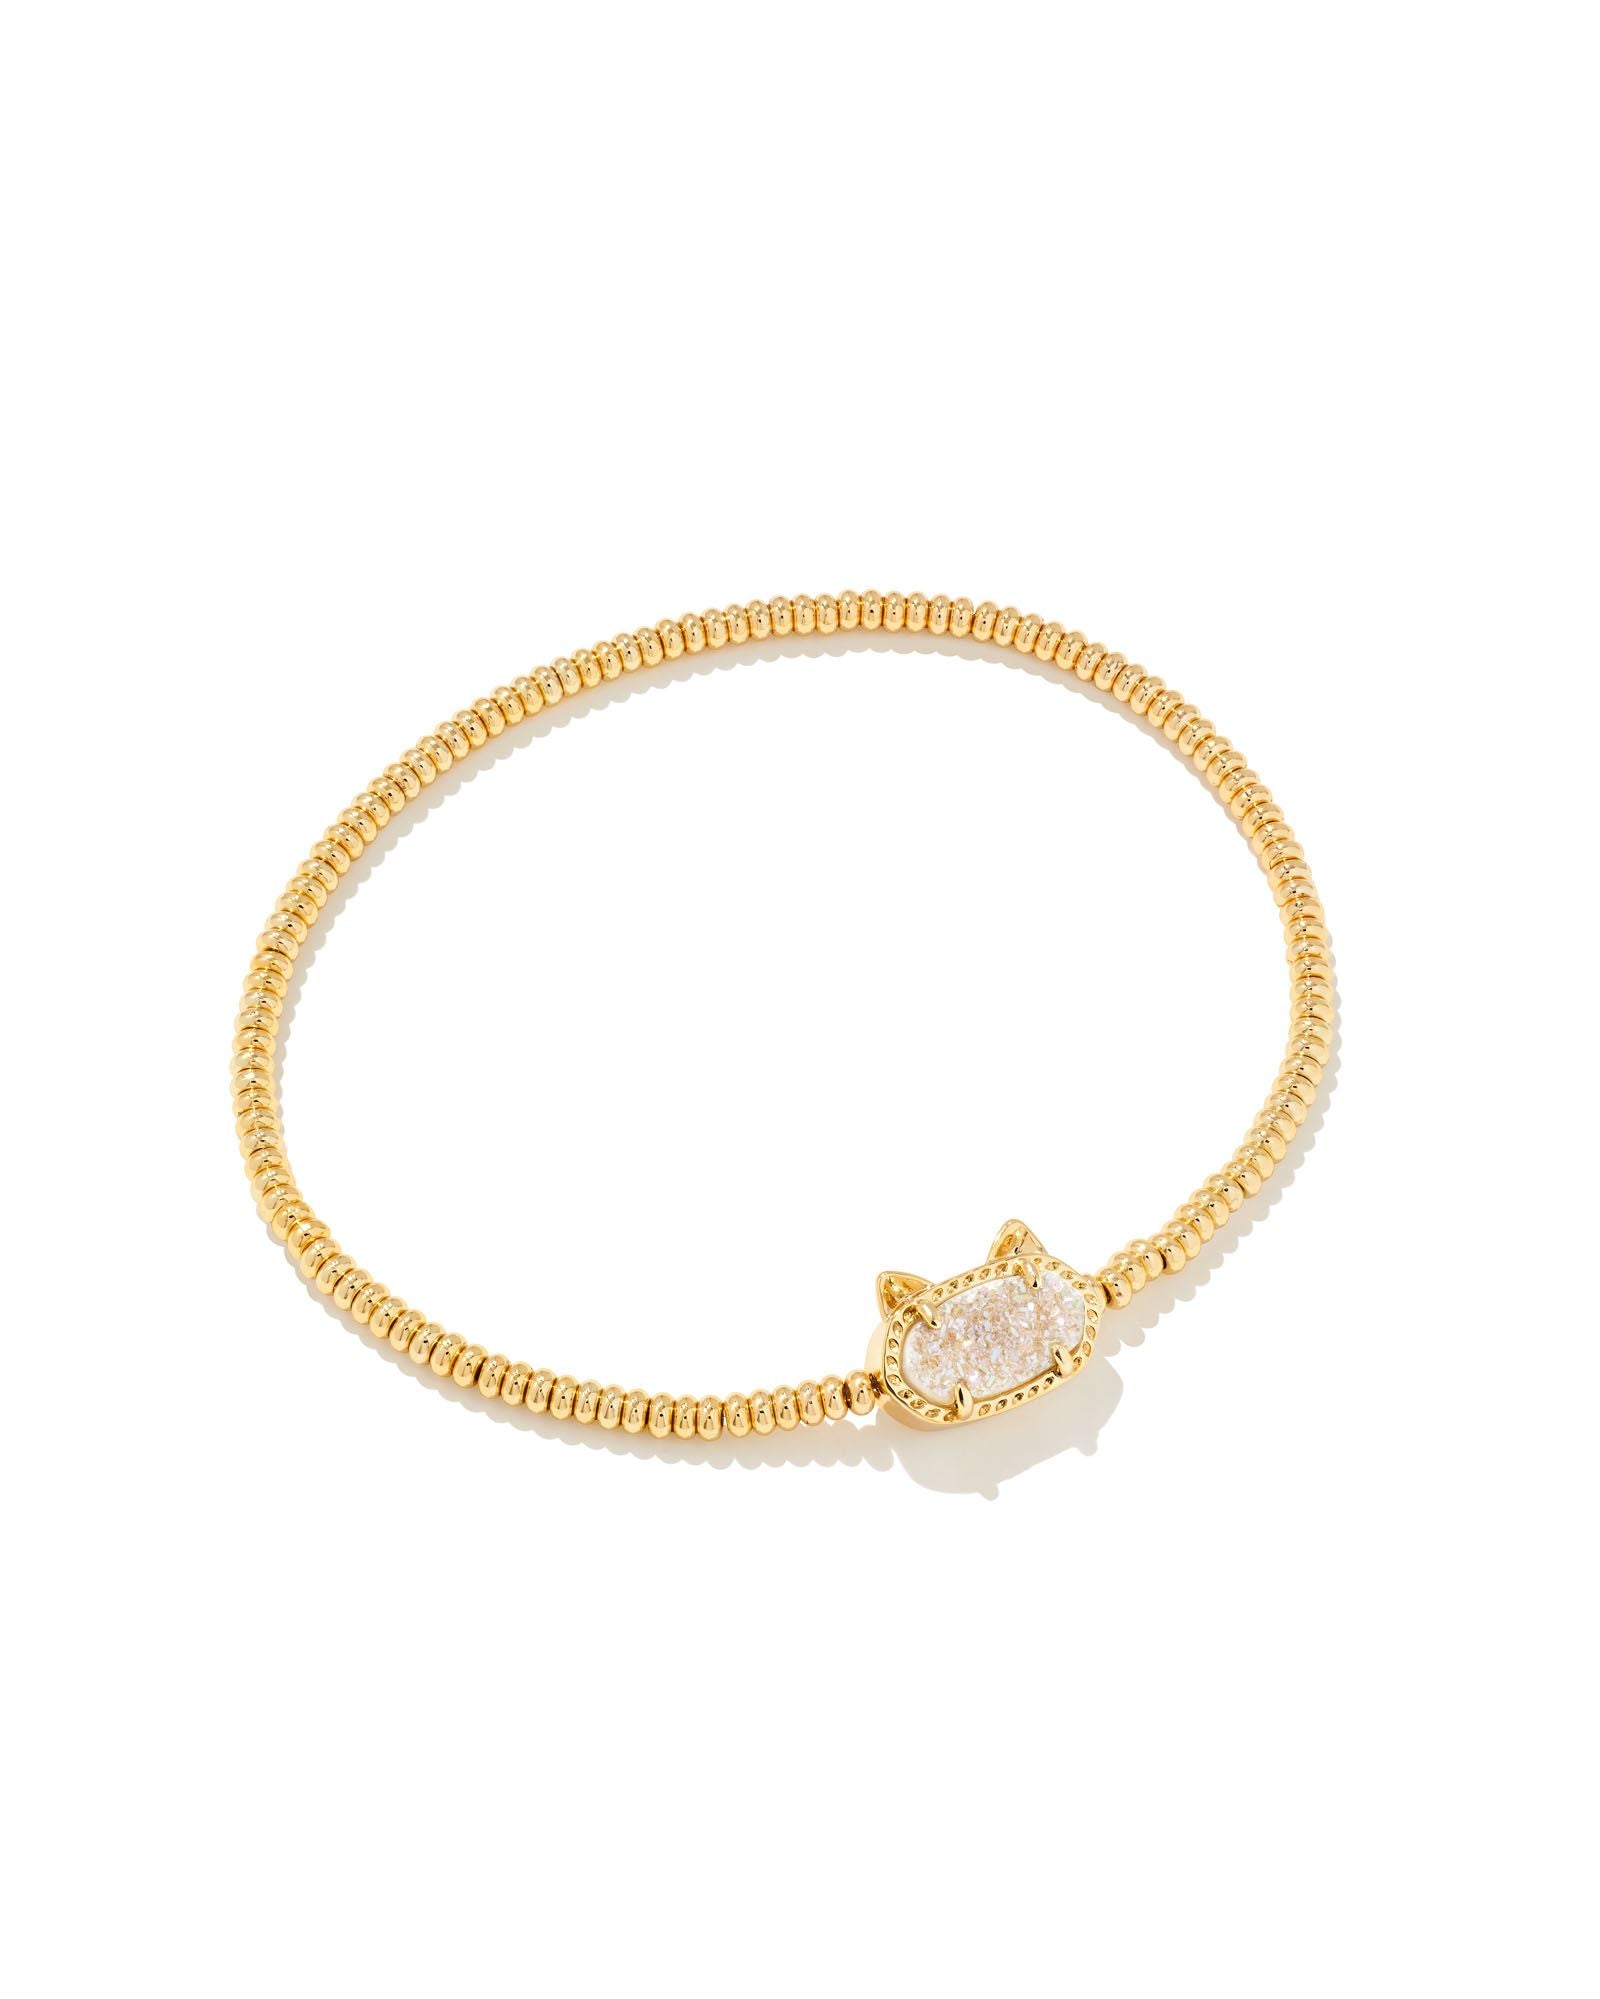 Grayson Cat Stretch Bracelet in Gold Iridescent Drusy